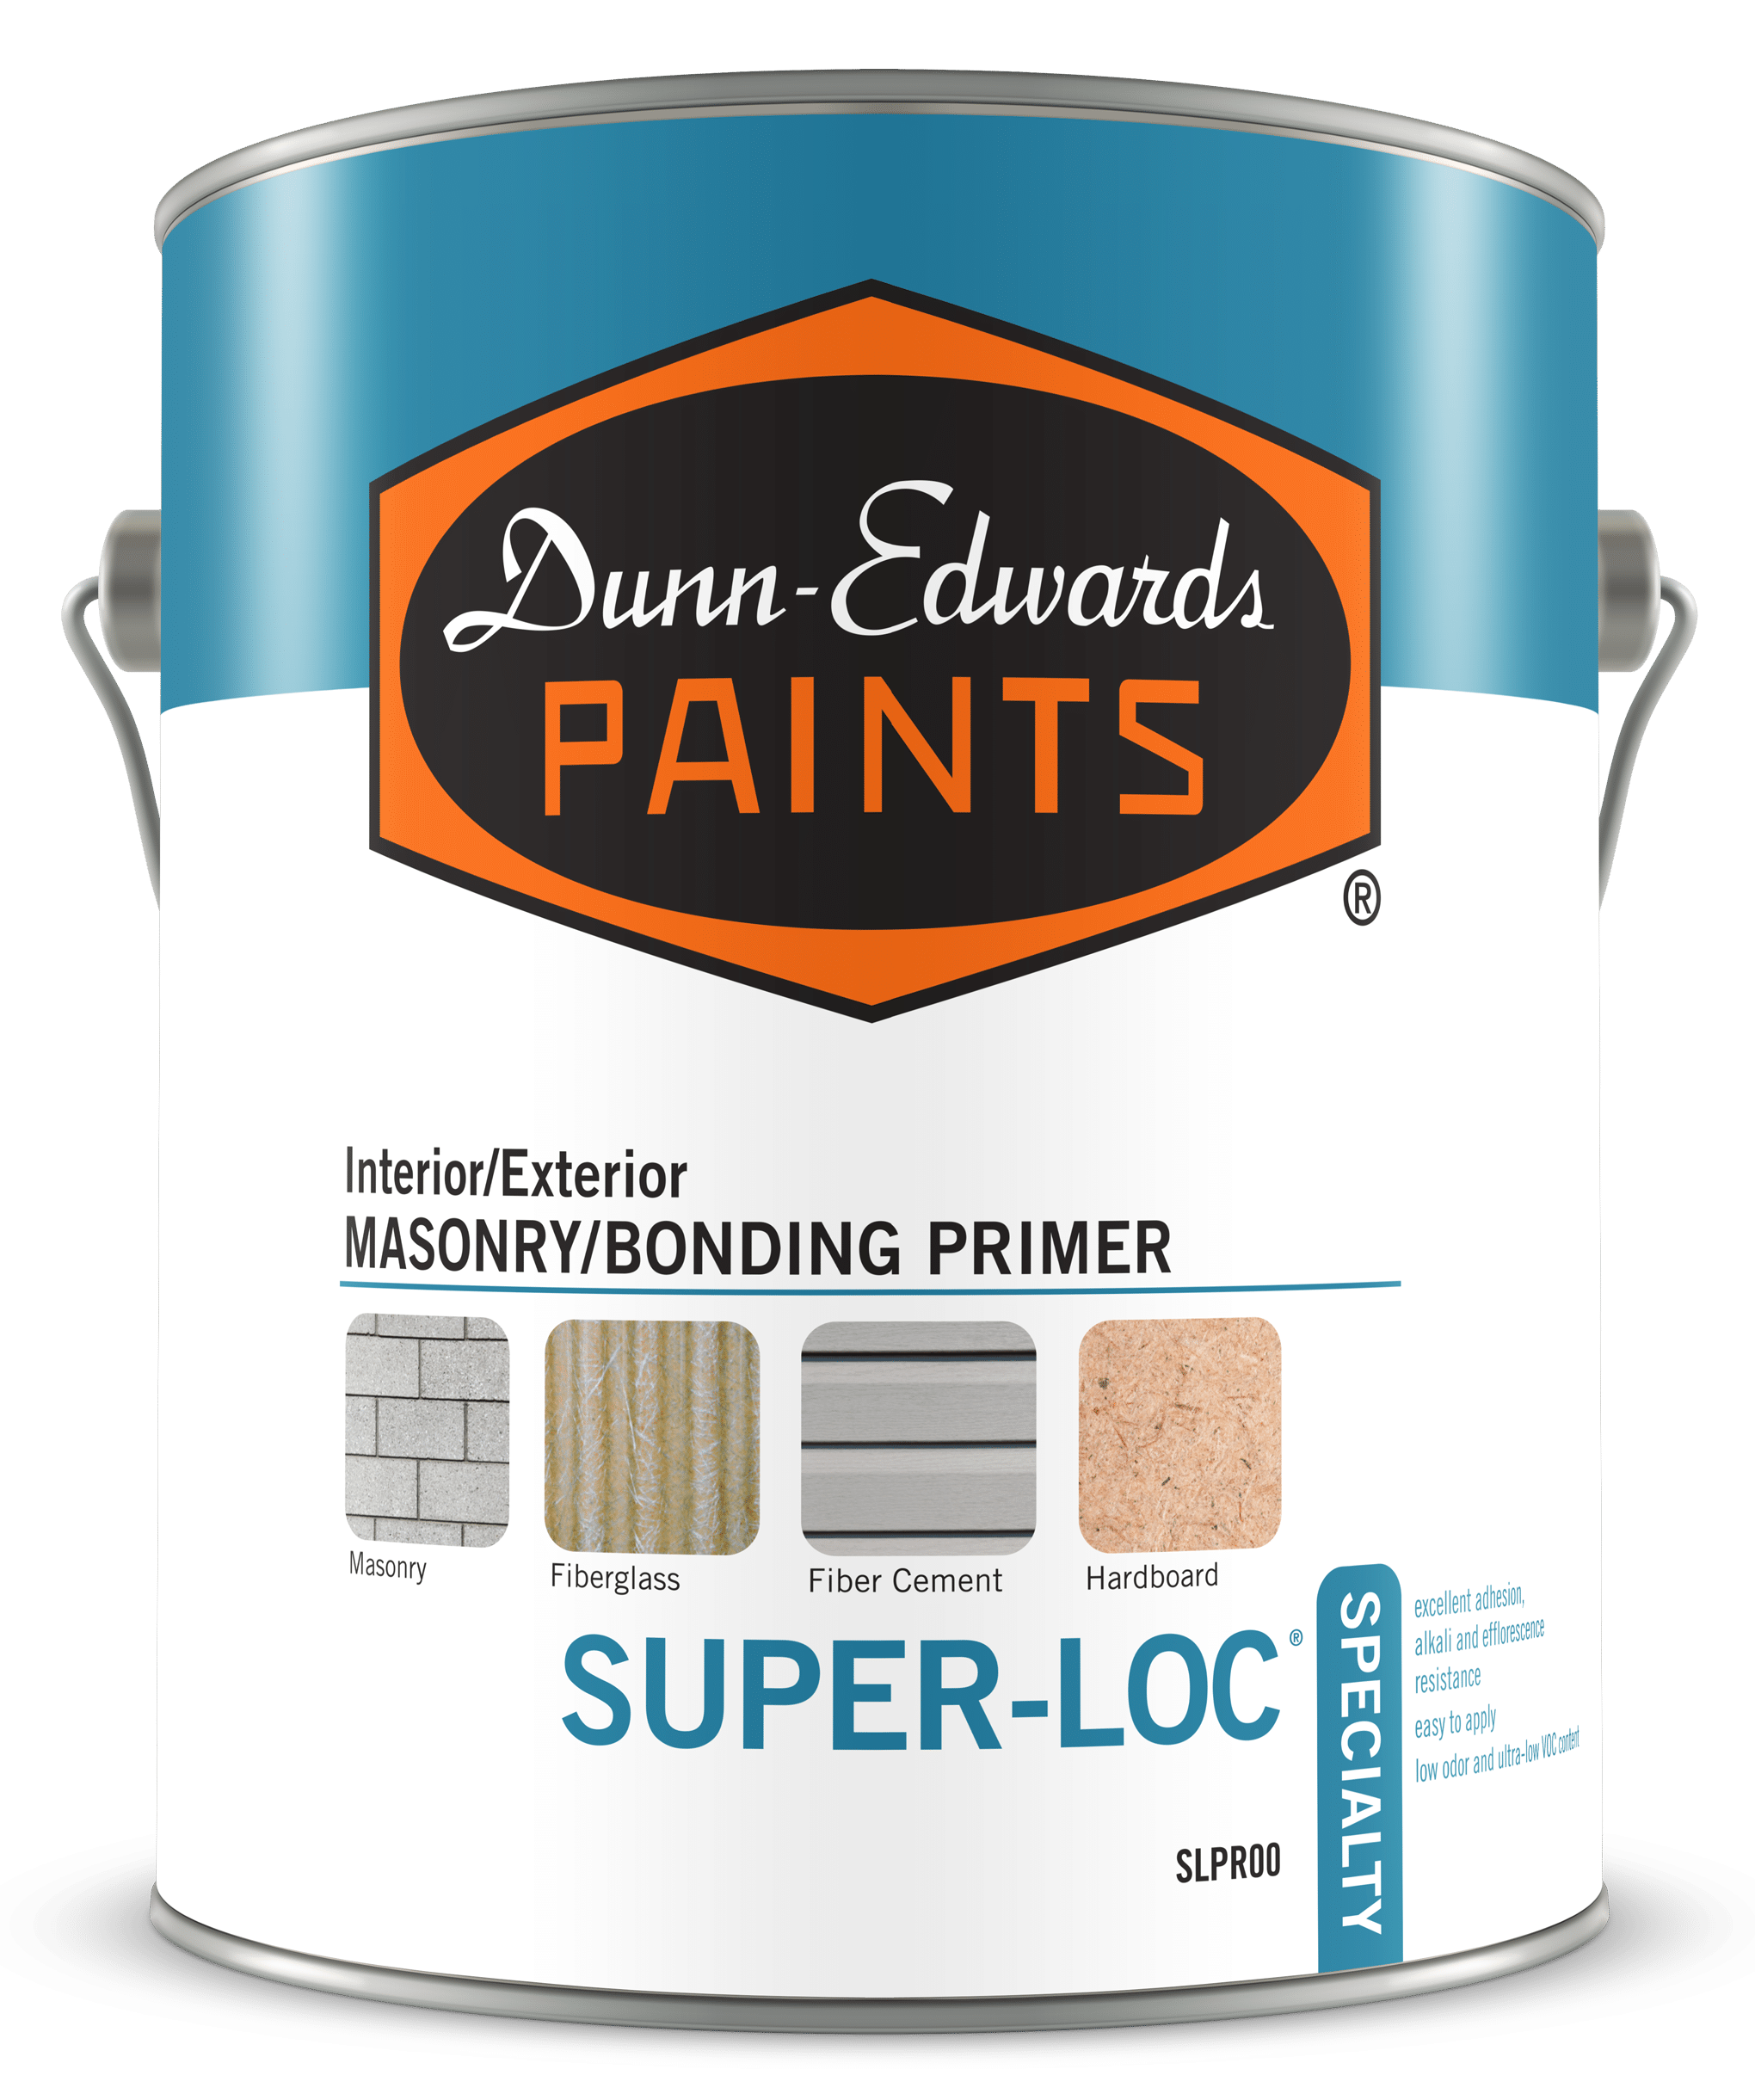 SUPER-LOC Specialty Interior/Exterior Masonry Bonding Primer Can